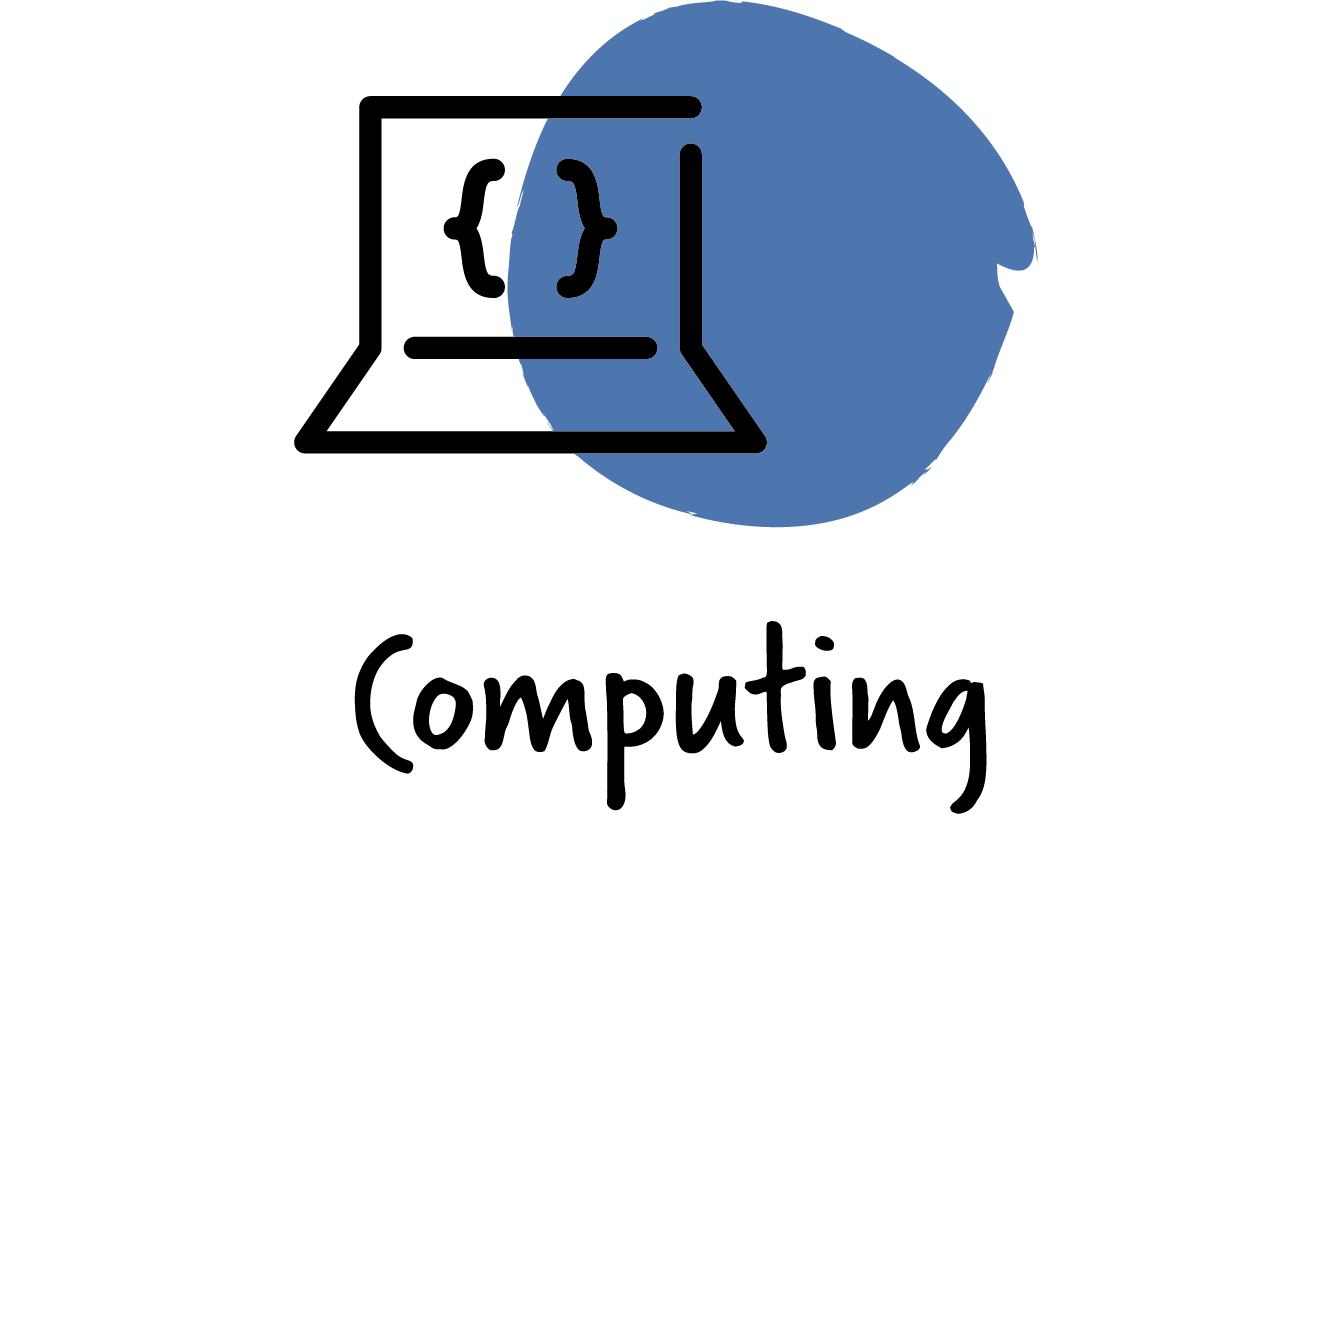 Computing_large_Top_Edge.png